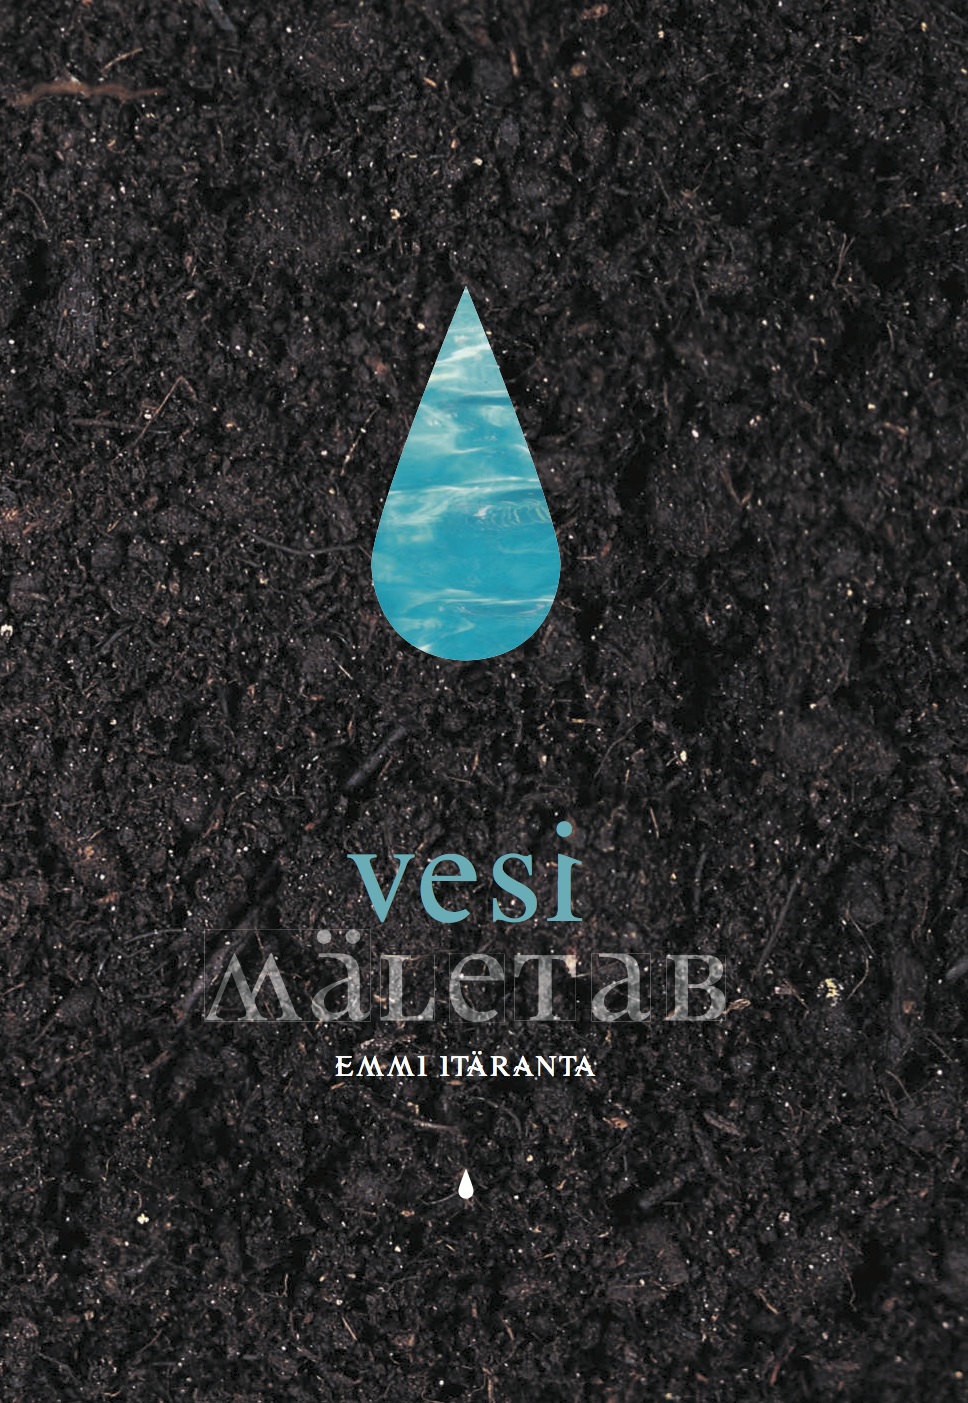 Vesi mäletab book cover